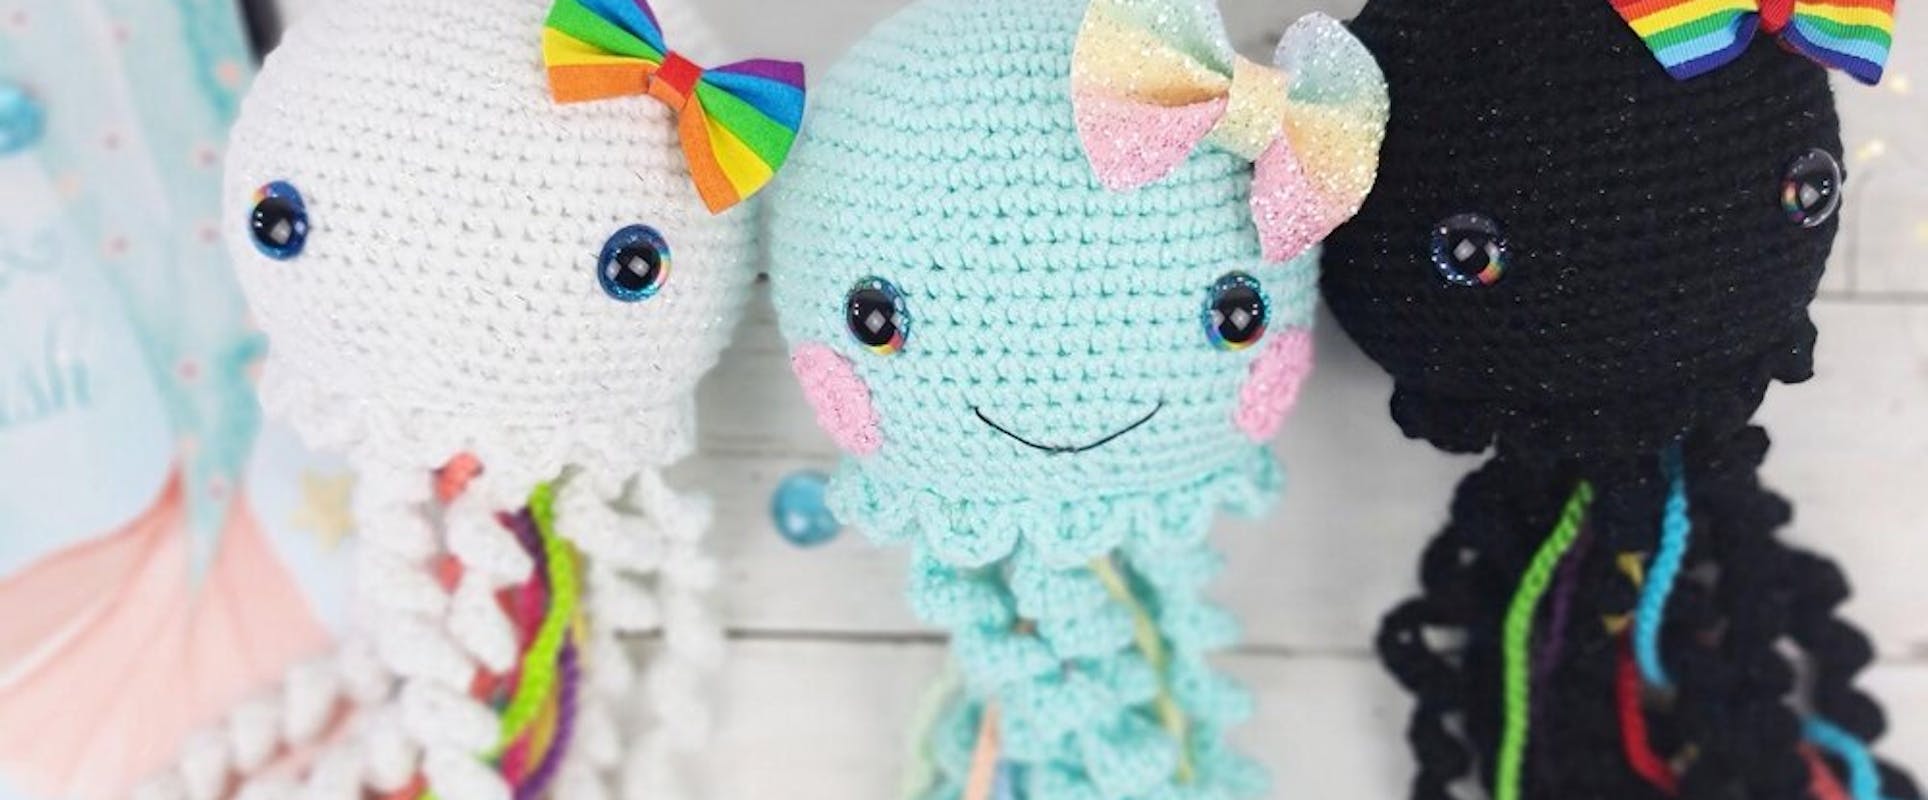 Beginner Amigurumi Patterns: Fun and Easy Crochet Amigurumi Patterns that  You Will Love!: Amigurumi Crochet Patterns for Beginners